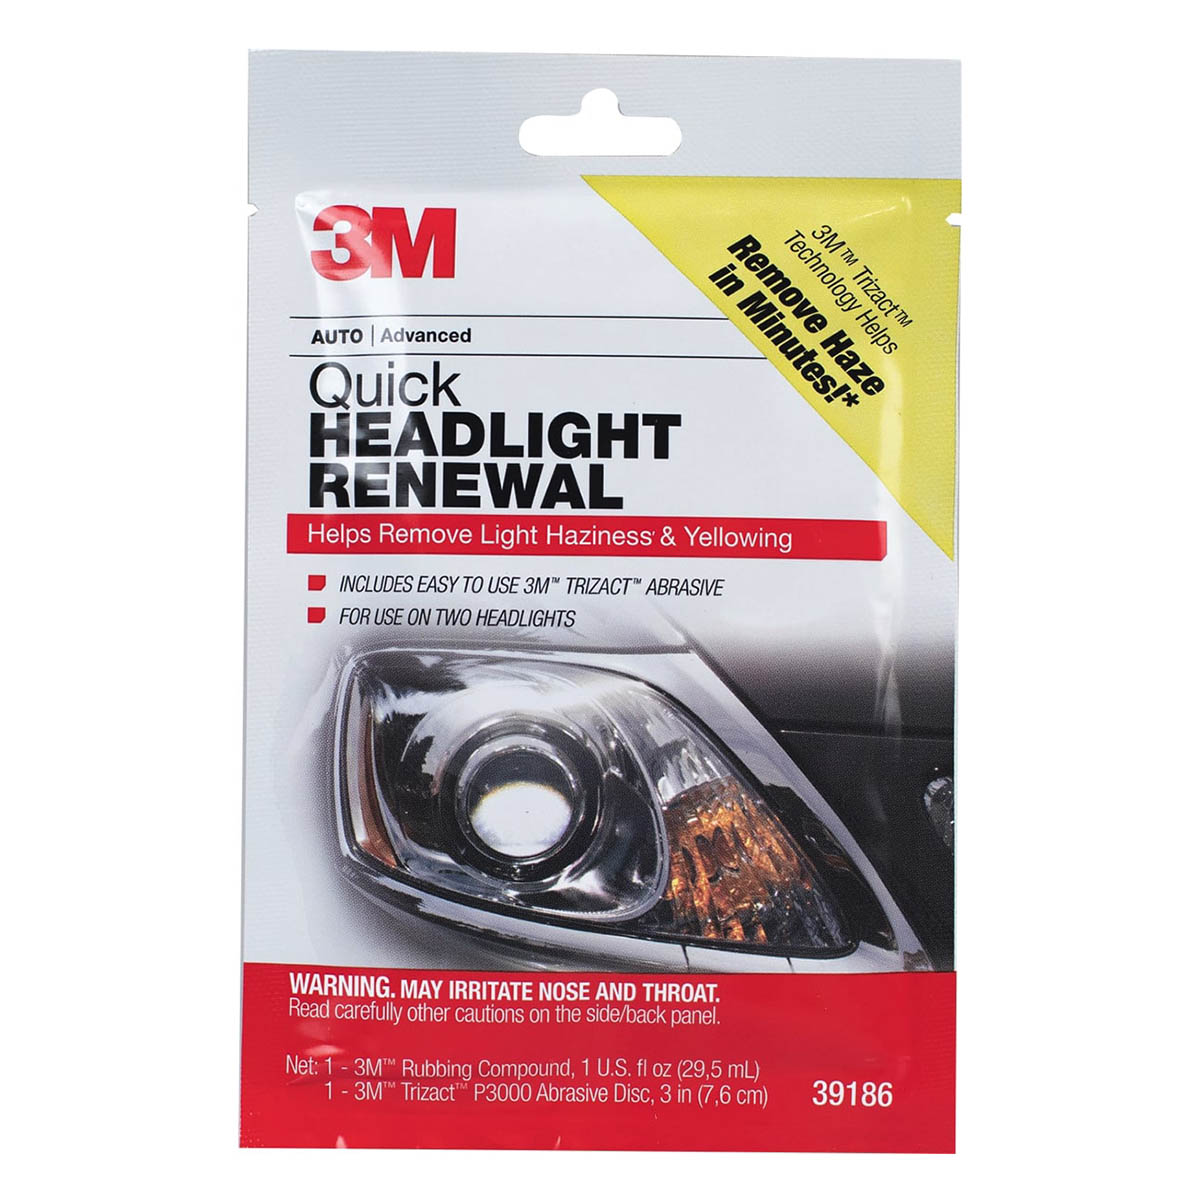 3M Quick Headlight Renewal Plus